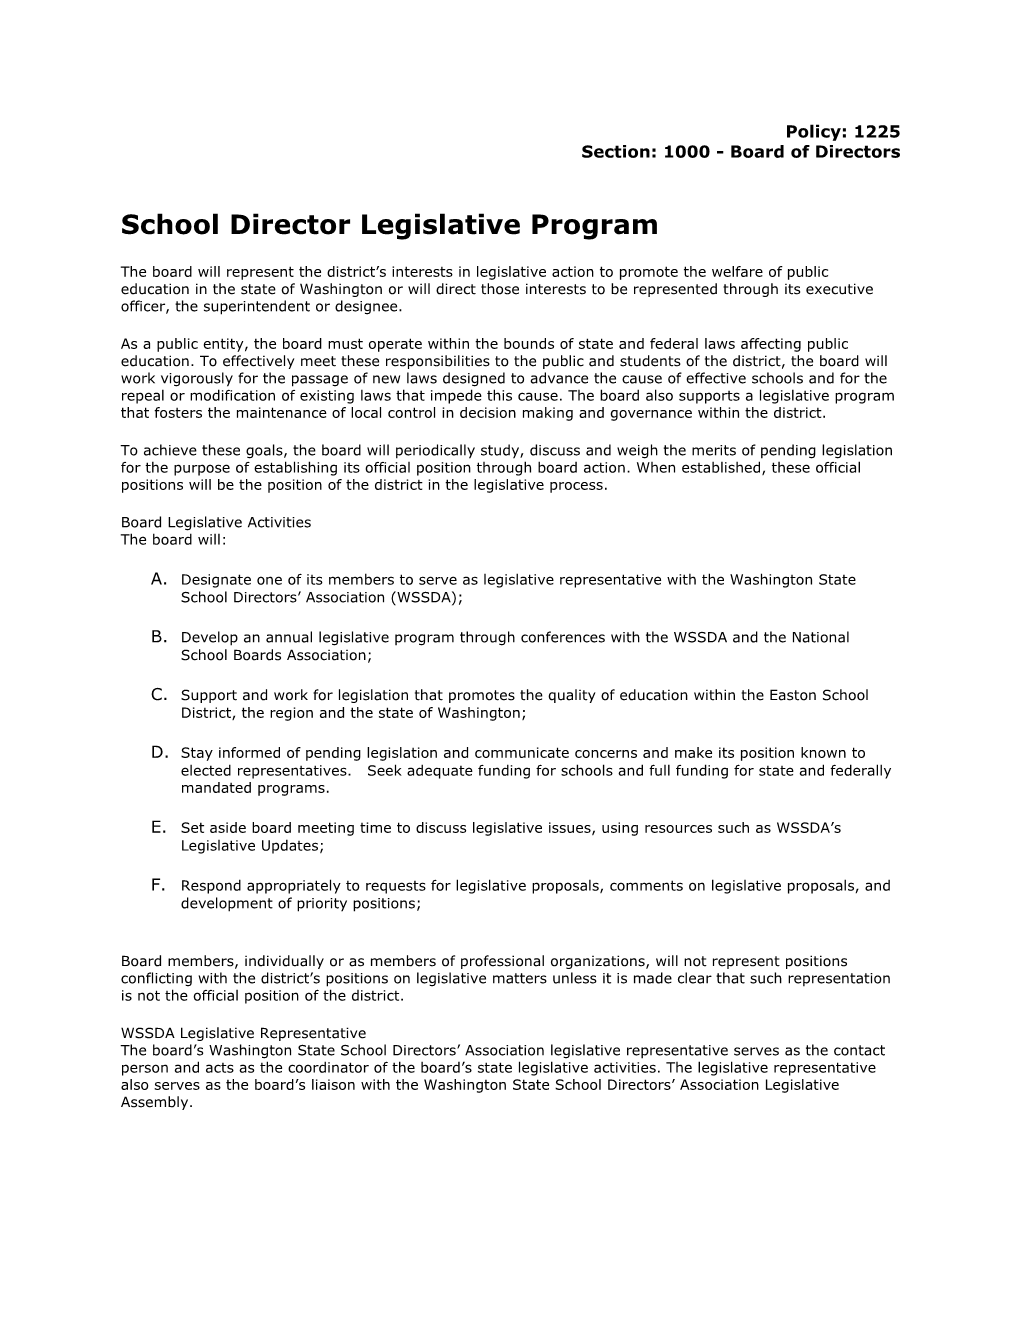 School Director Legislative Program